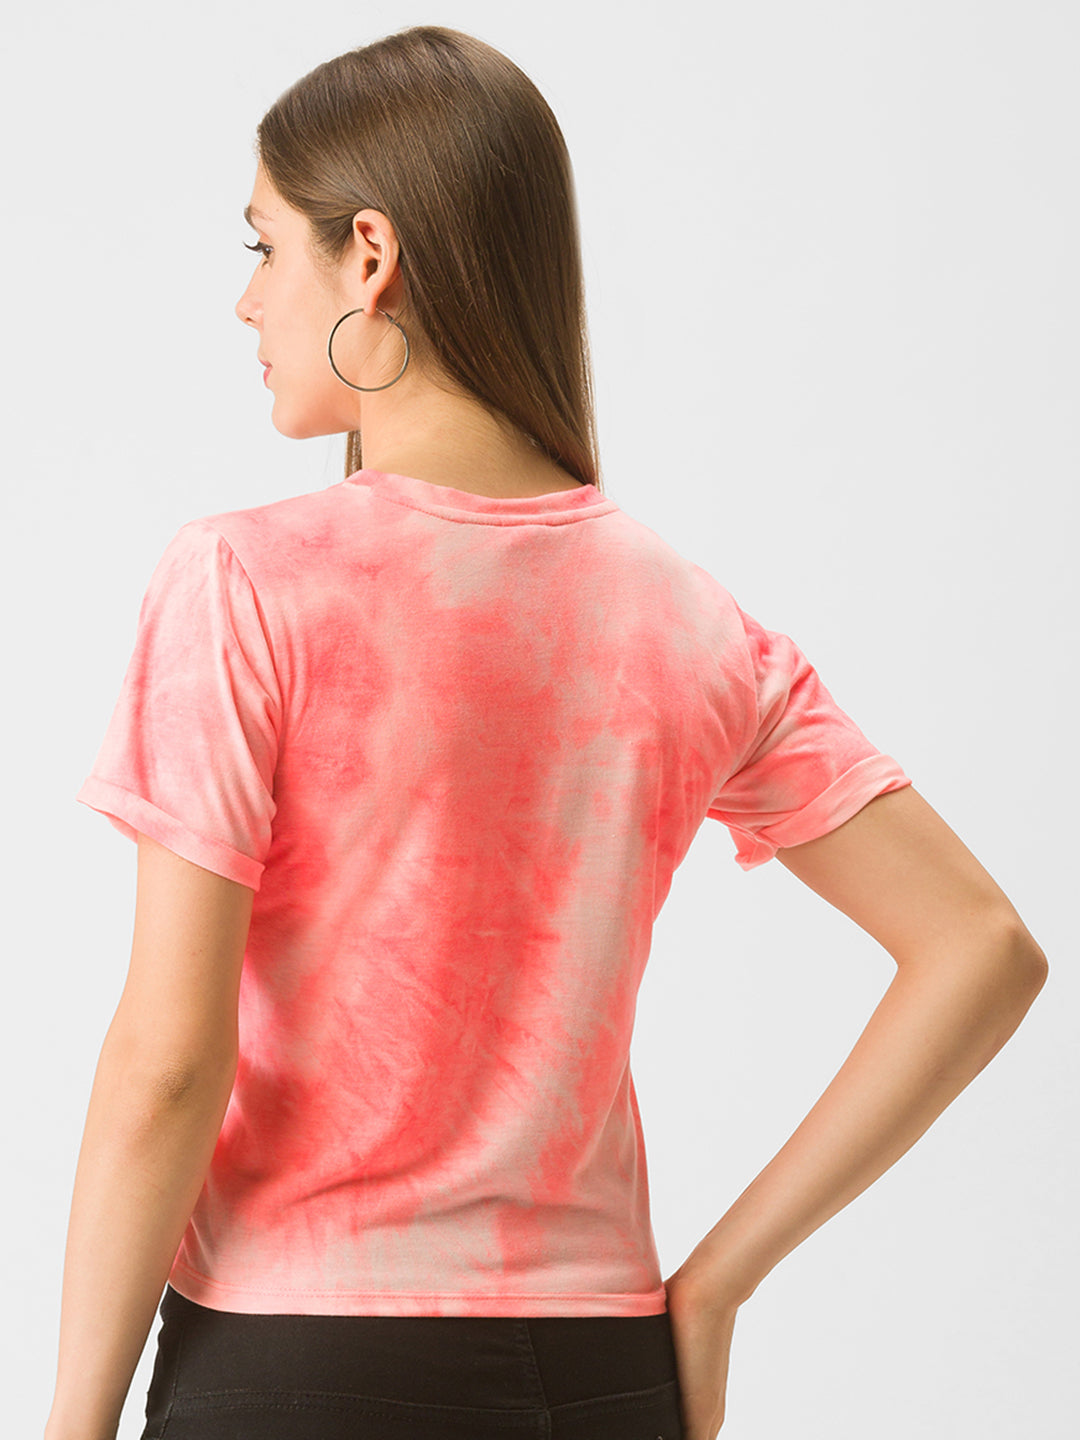 Globus Pink Dyed Tshirt